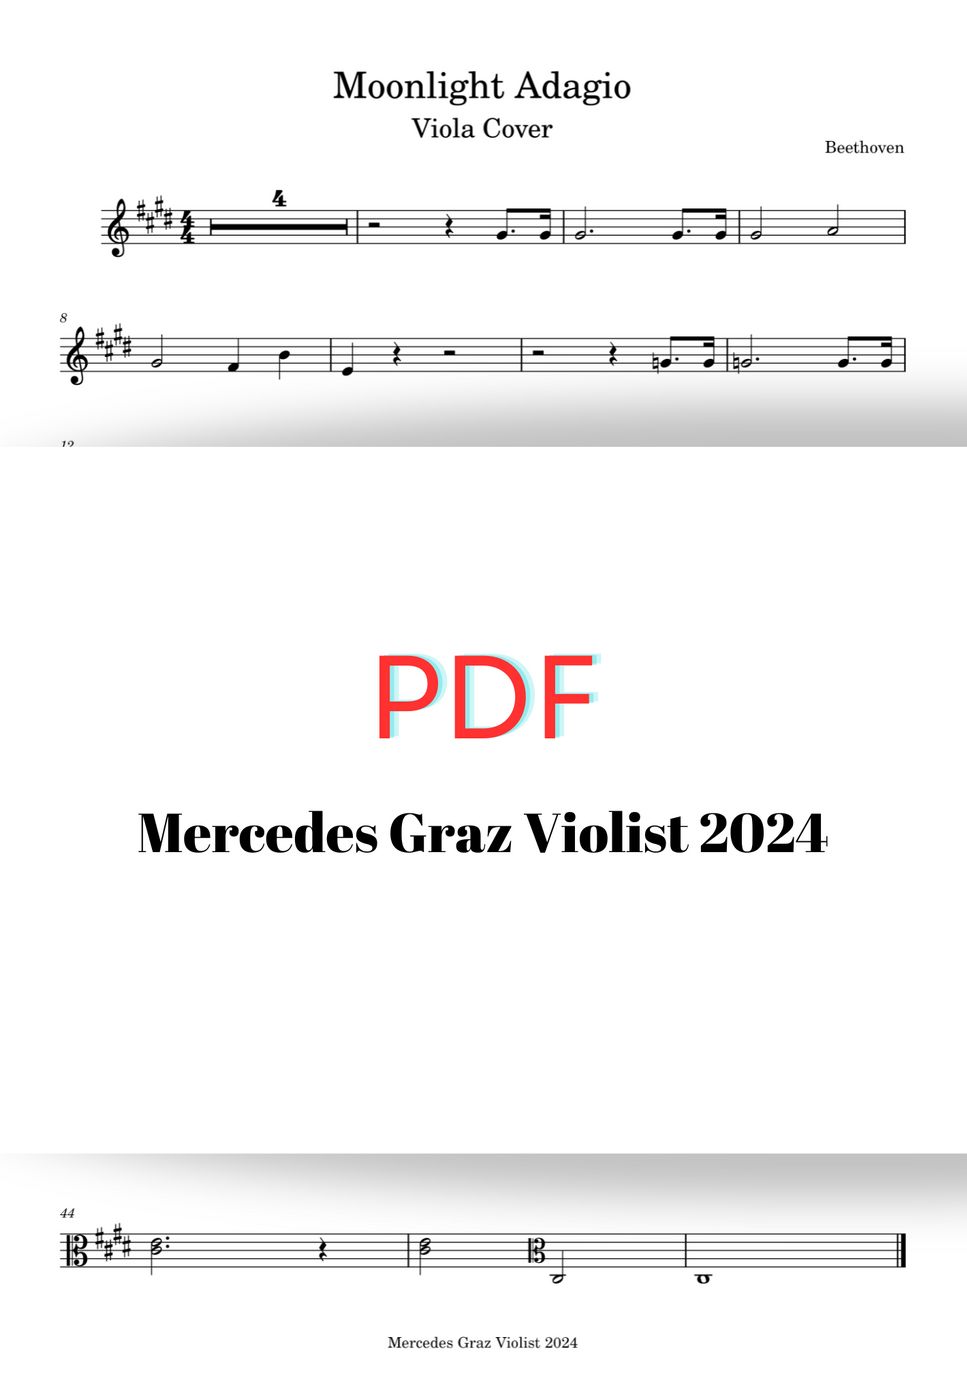 Ludwig van Beethoven - Moonlight Adagio (Viola and Piano) by Mercedes Graz